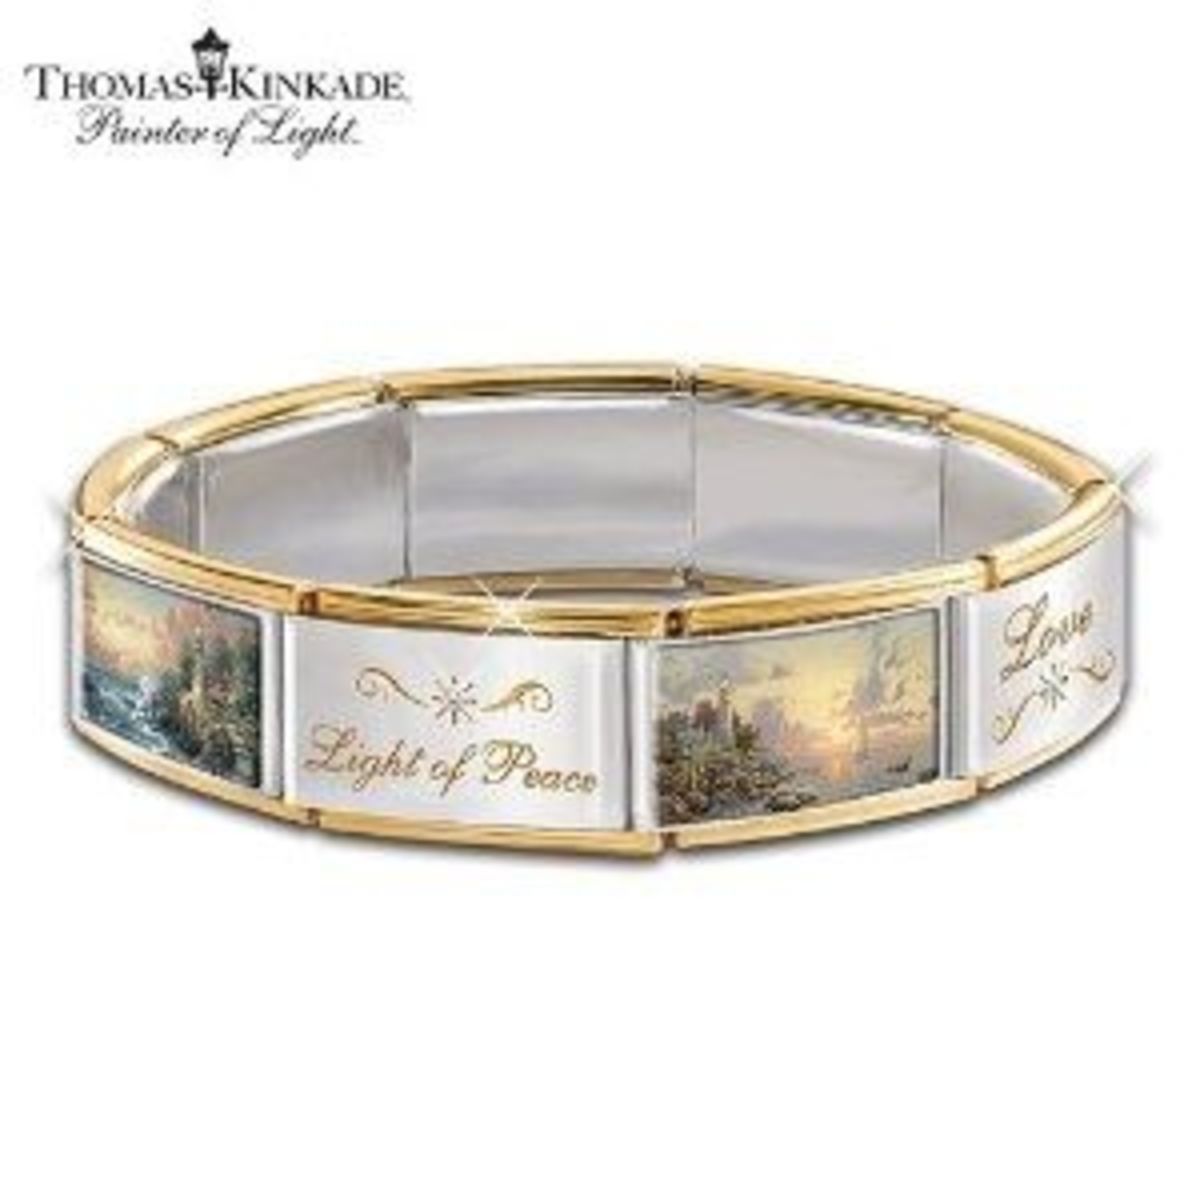 Hope Lights the Way Italian Charm Bracelet with Swarovski® Crystals  Thomas Kinkade bracelet by The Bradford Exchange.